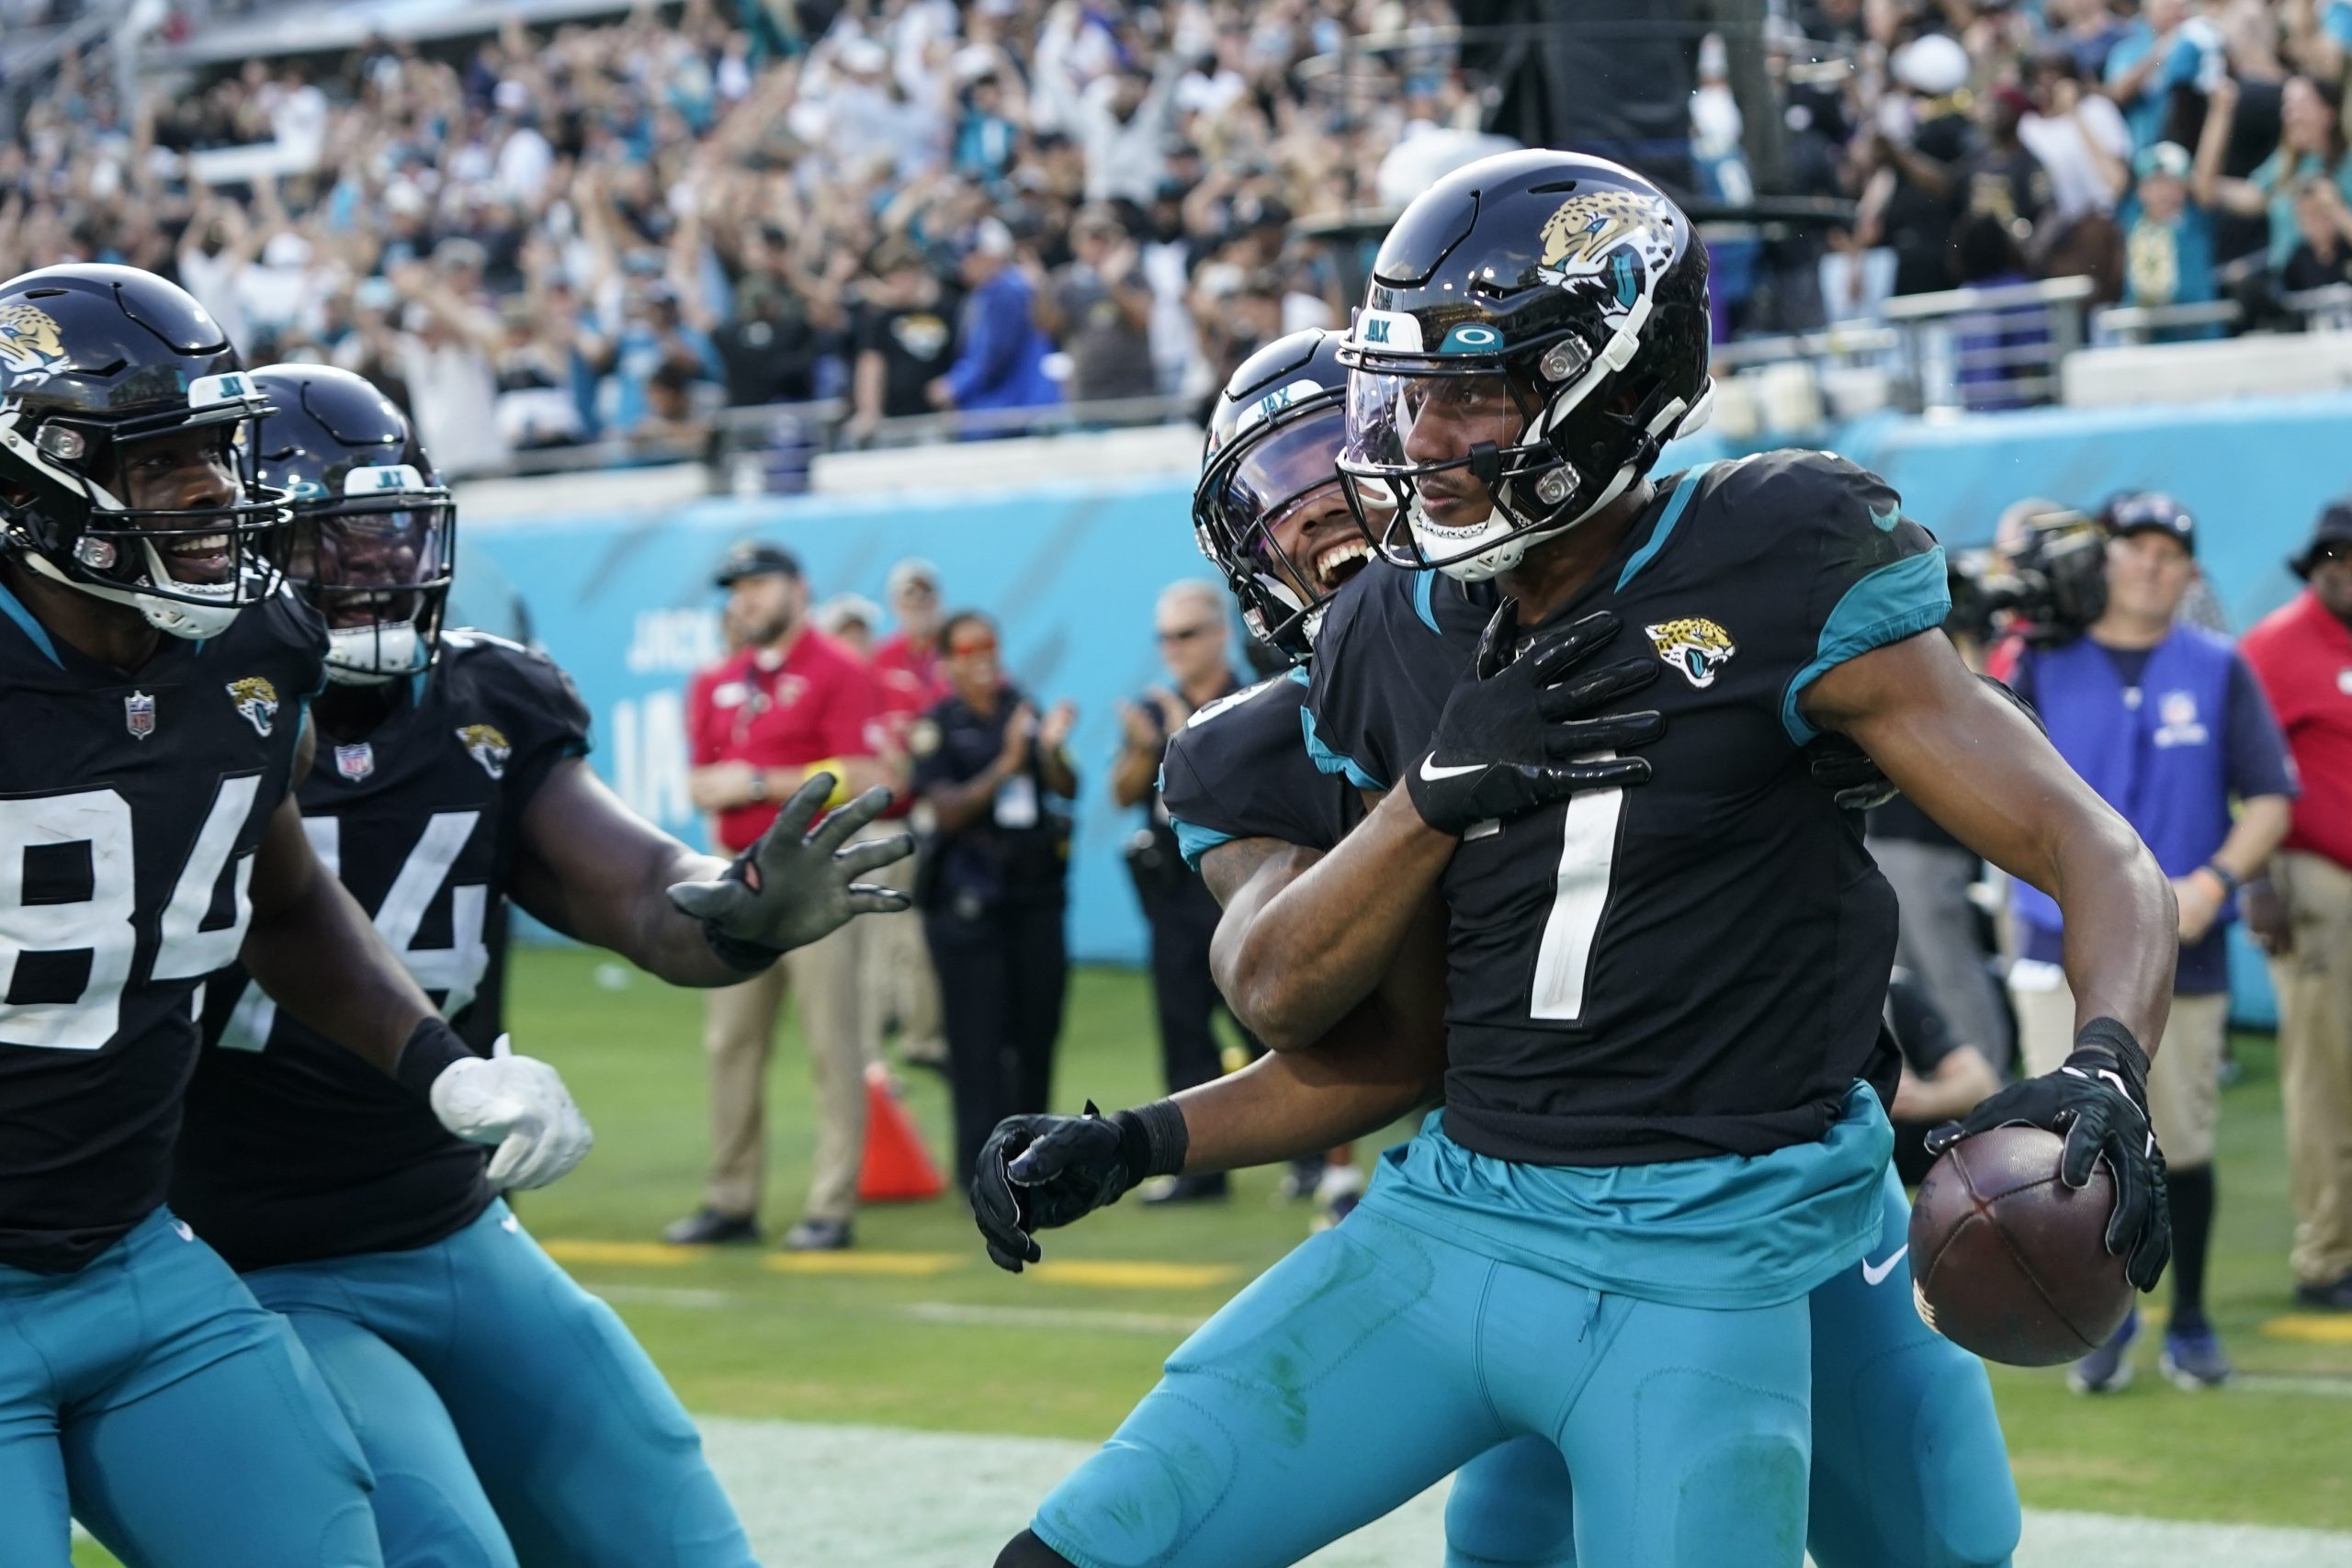 Takeaways from Jacksonville Jaguars loss to NY Giants in NFL Week 7